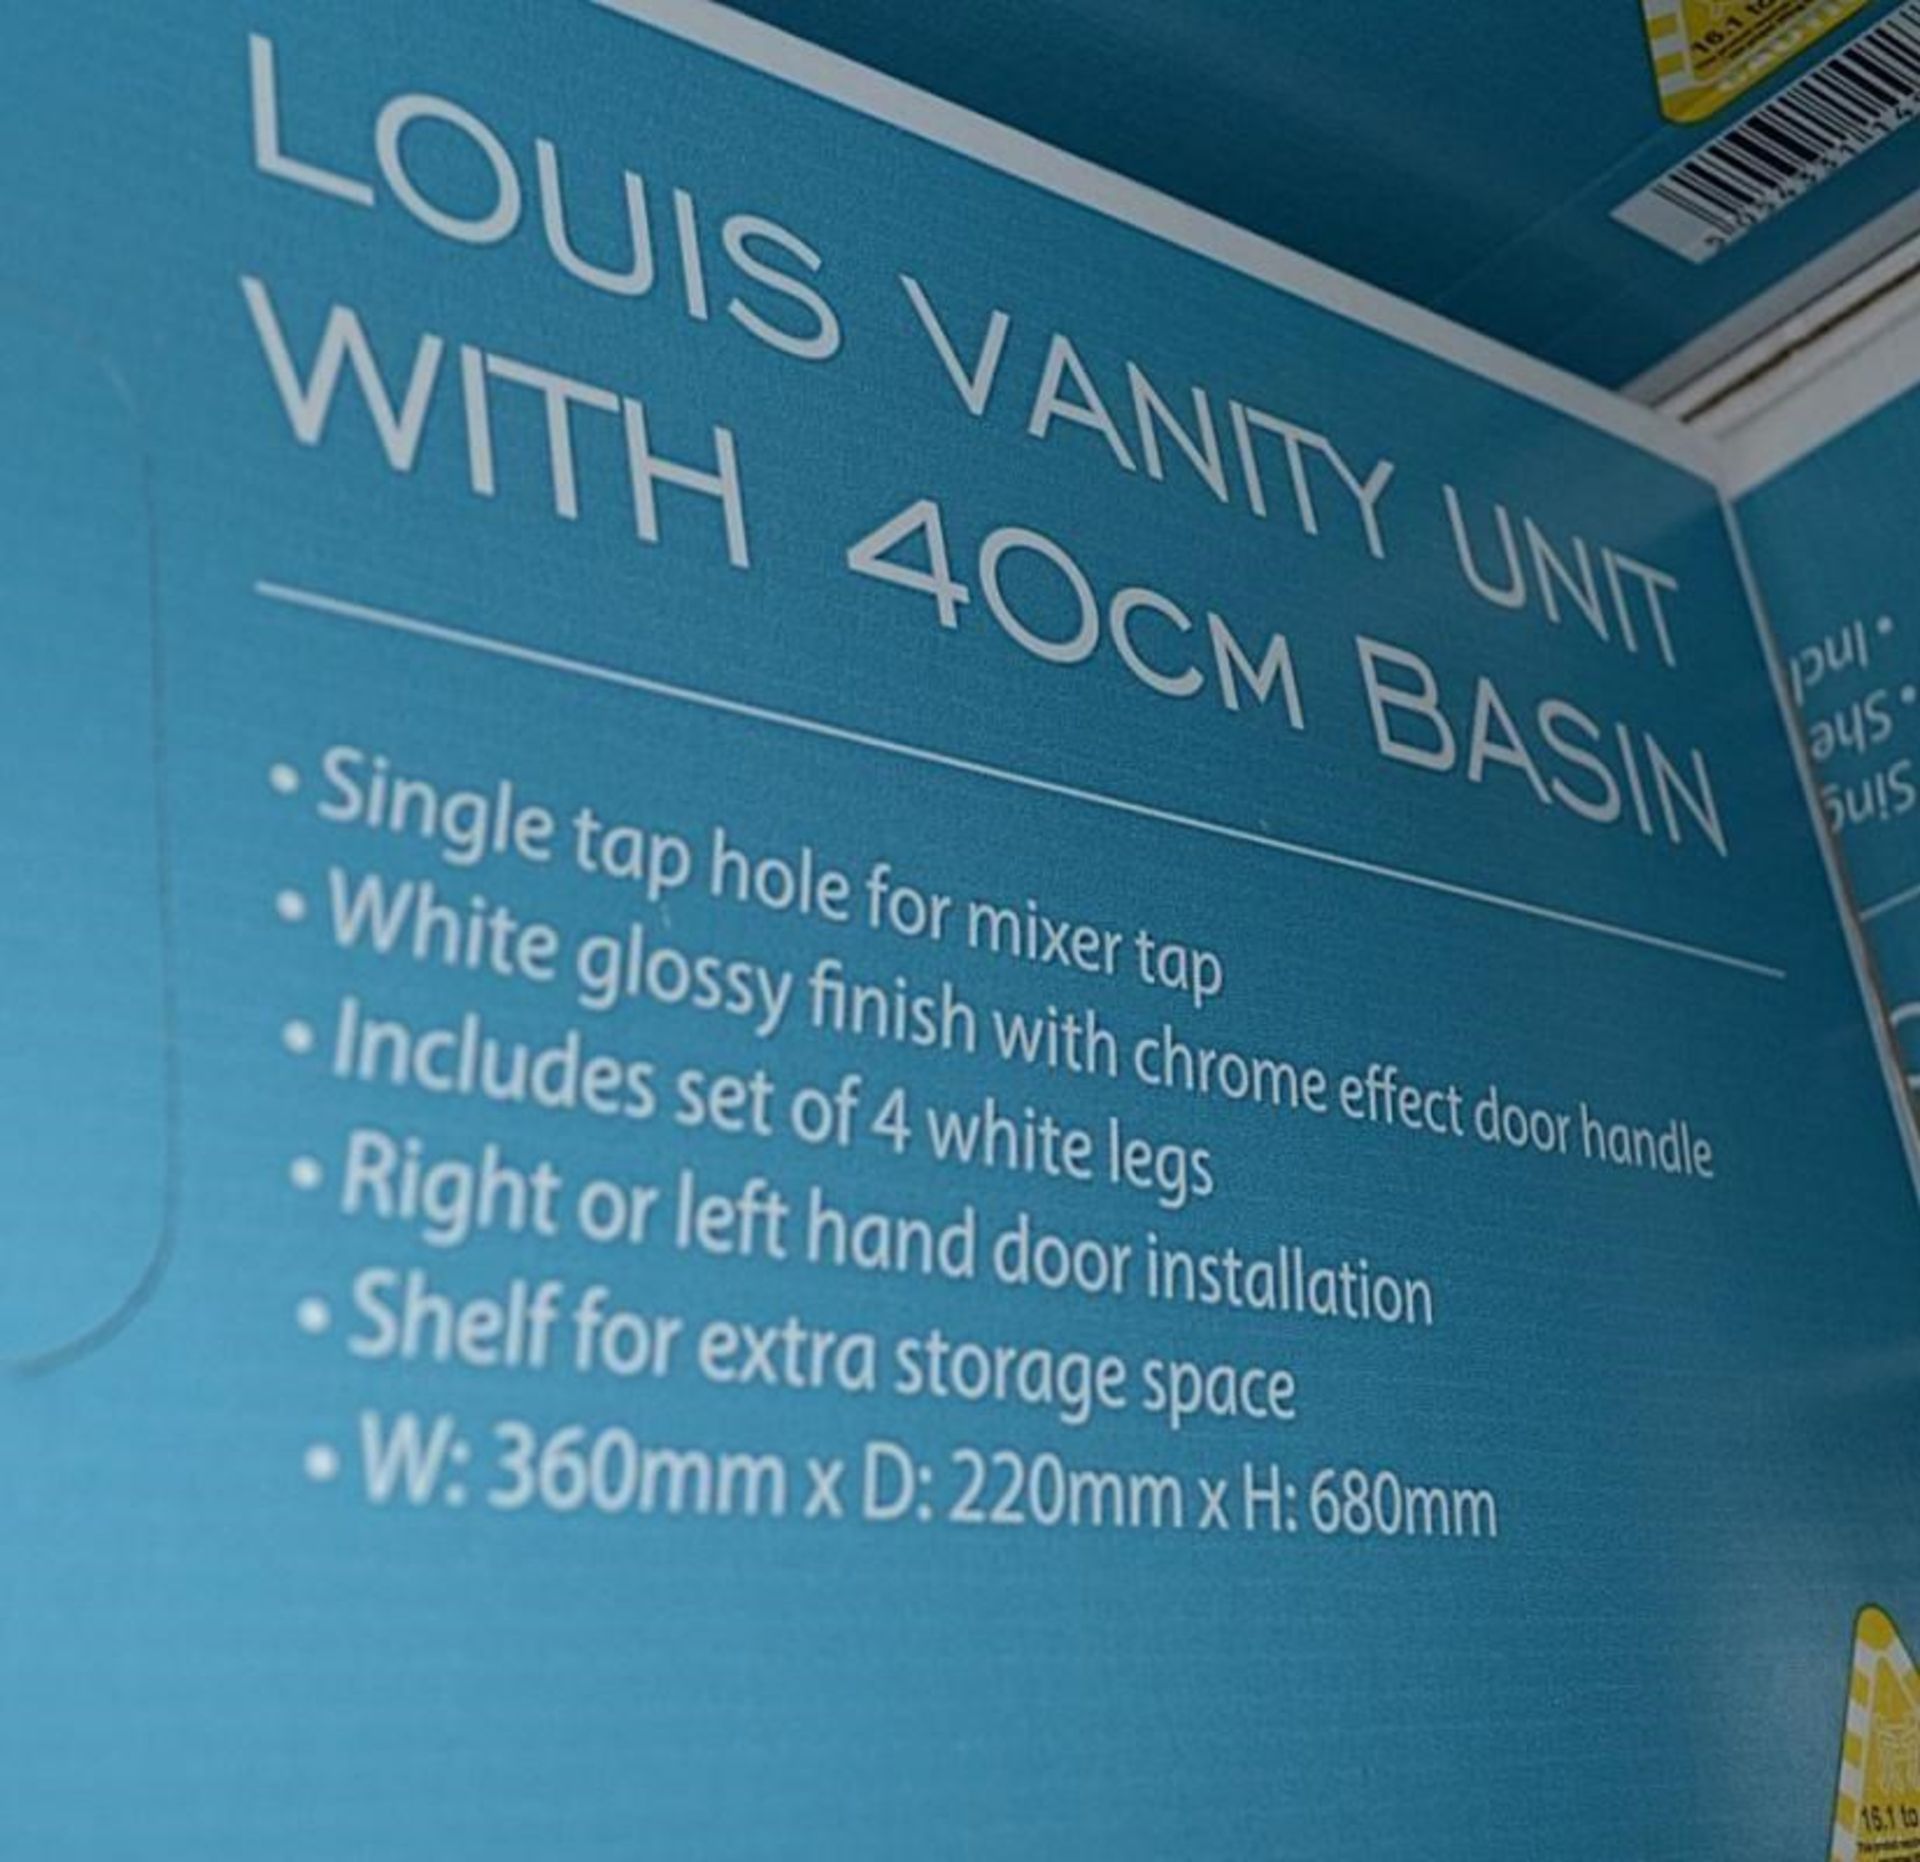 1 x Estilo Louis 40 Vanity Unit & Basin In White - Brand New Boxed Stock - Image 3 of 5